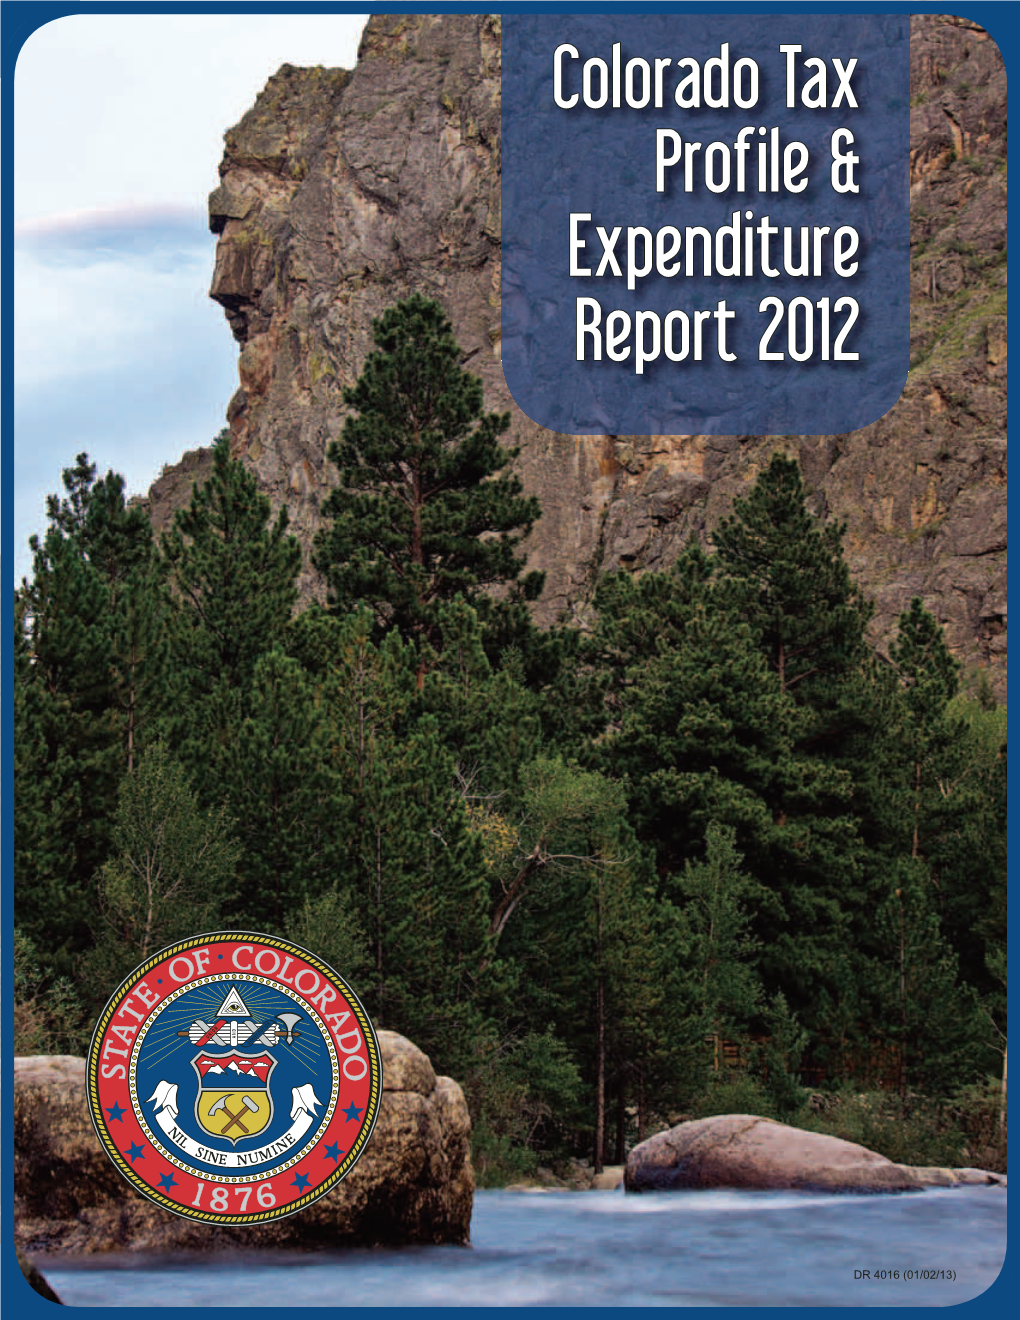 Colorado Profile & Expenditure Report 2012